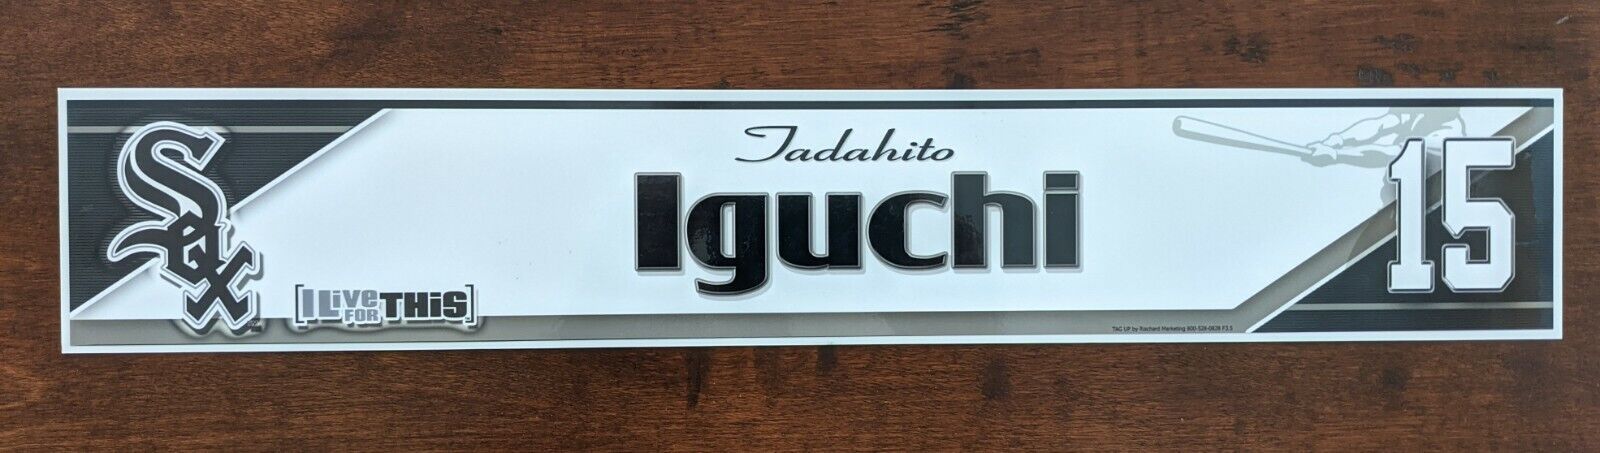 Tadahito Iguchi White Sox game-used locker plate (2005 World Series, Japanese)